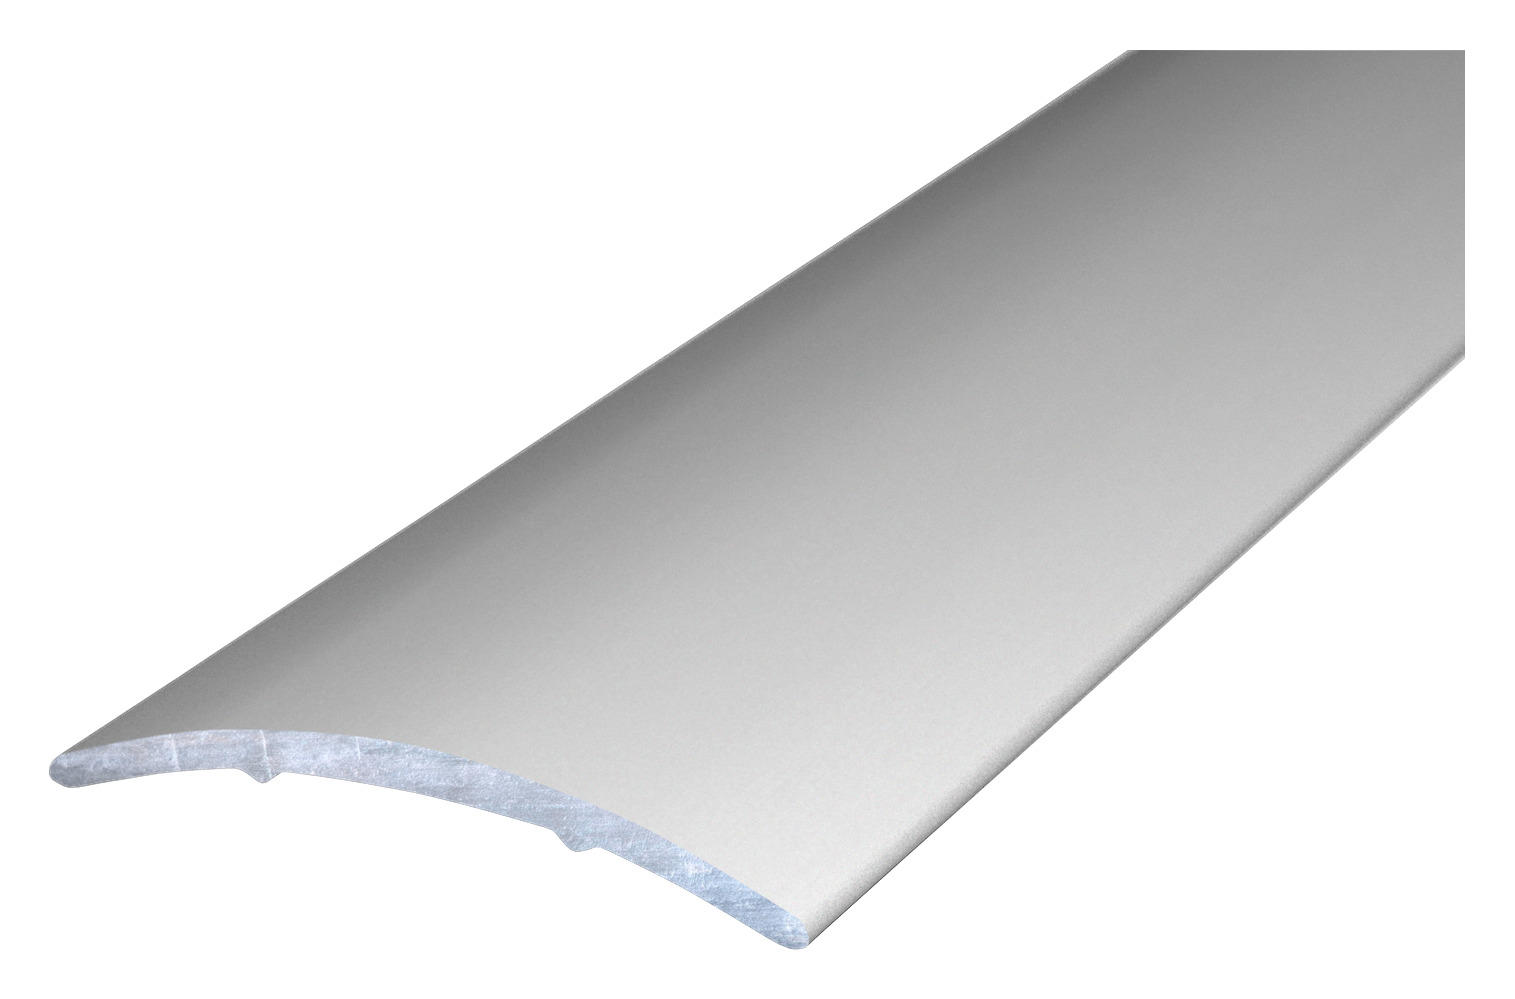 Übergangsprofil silber B/L: ca. 30x90 cm Übergangsprofil 900x30sk silber - silber (30,00/90,00cm)